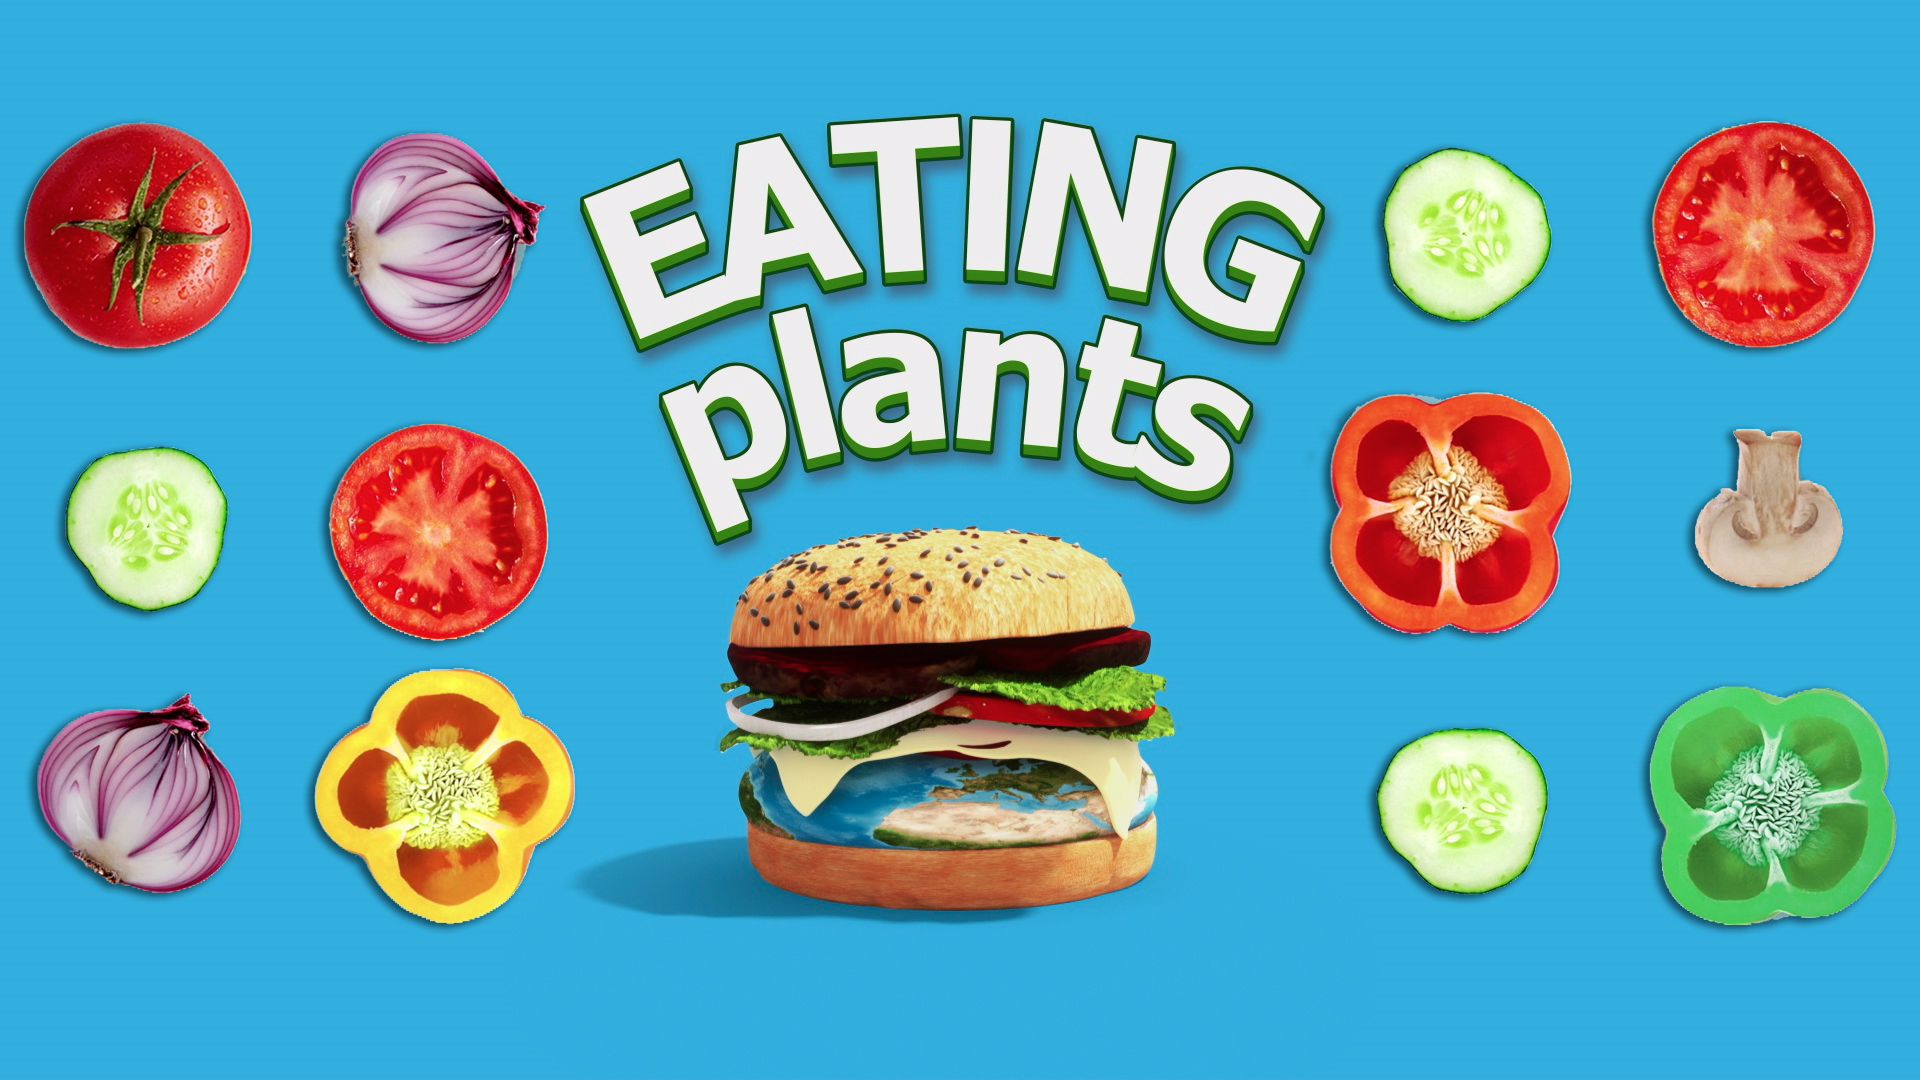 Eating plants